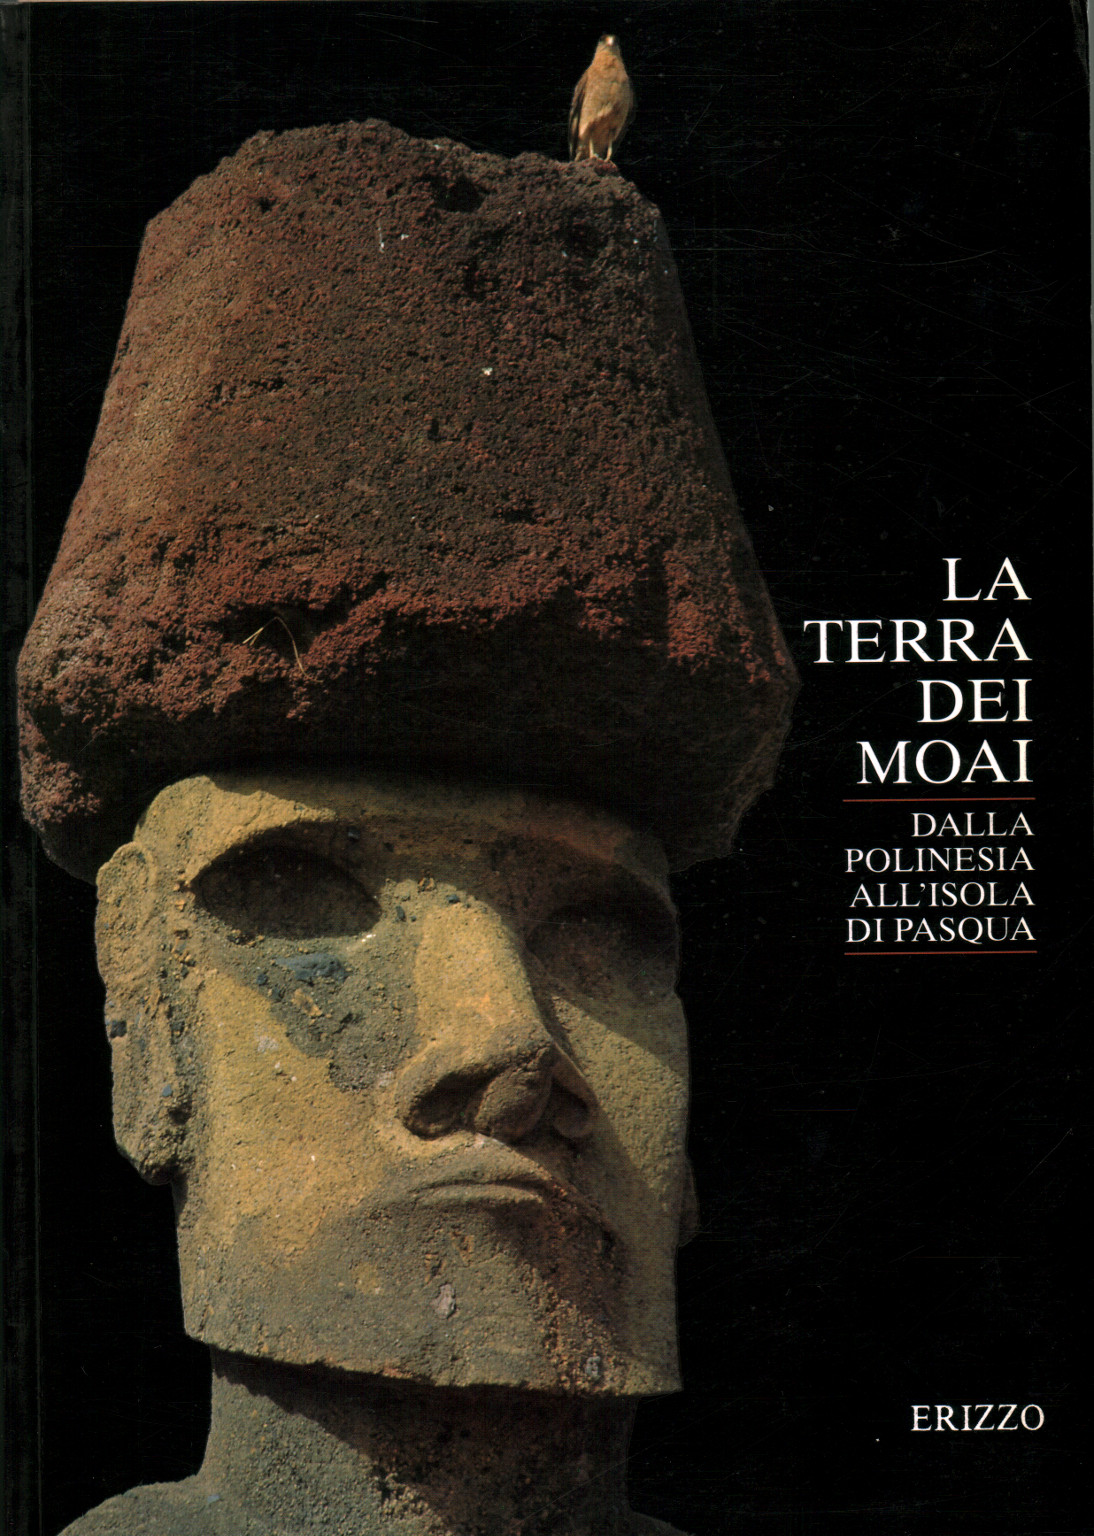 The land of the Moai